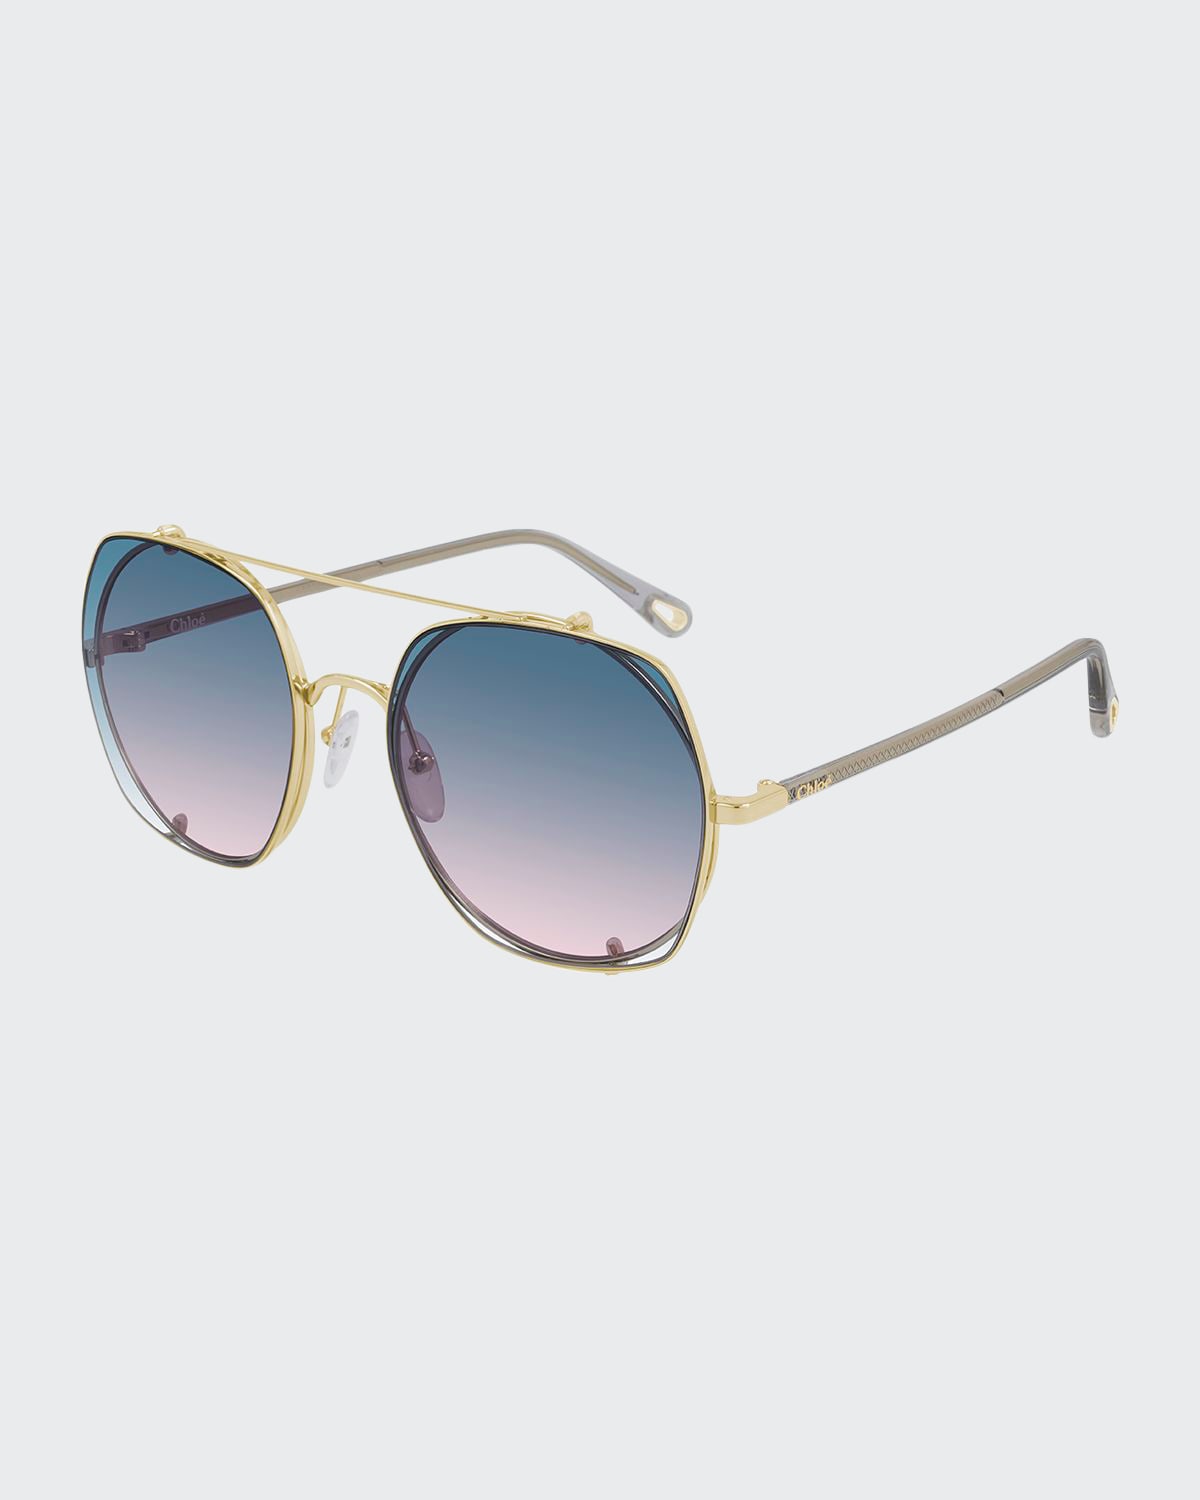 Chloé Geometric Metal Sunglasses In Light Blue / Gold